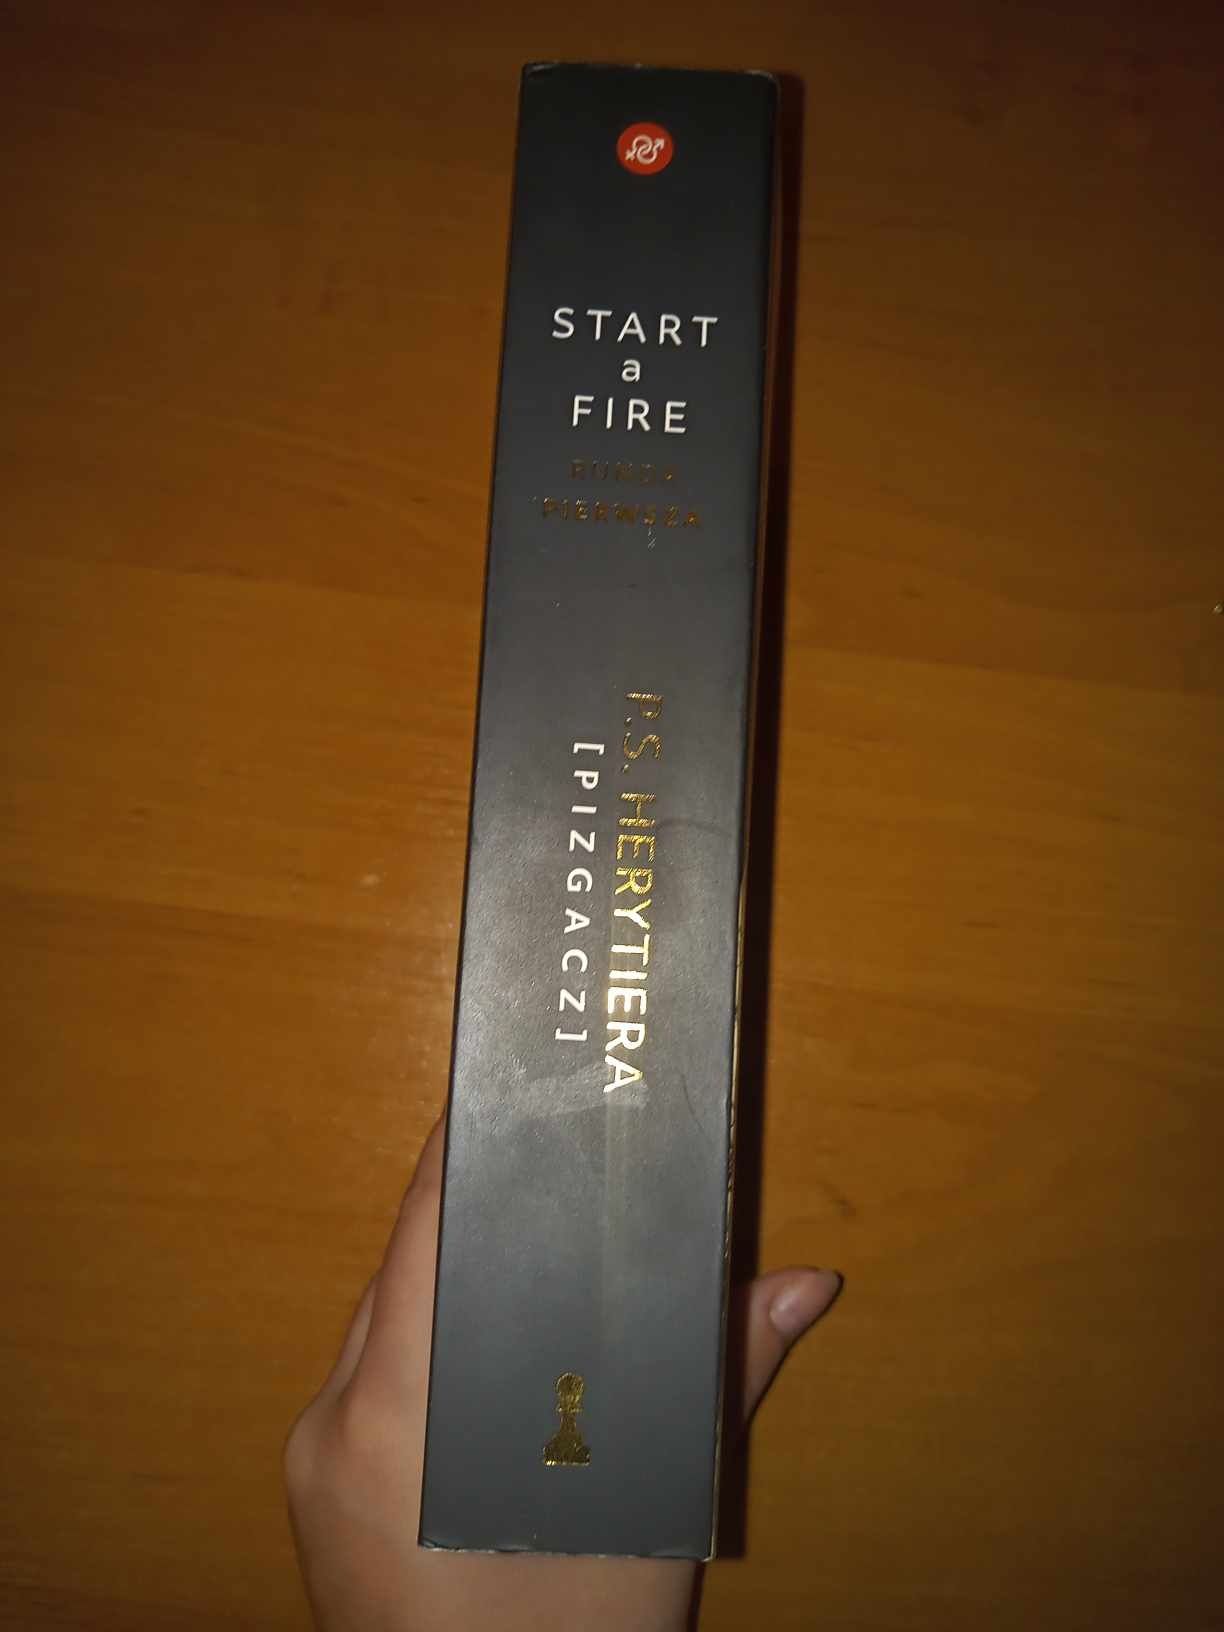 "Start a fire. runda pierwsza" P.S. HERYTERIA